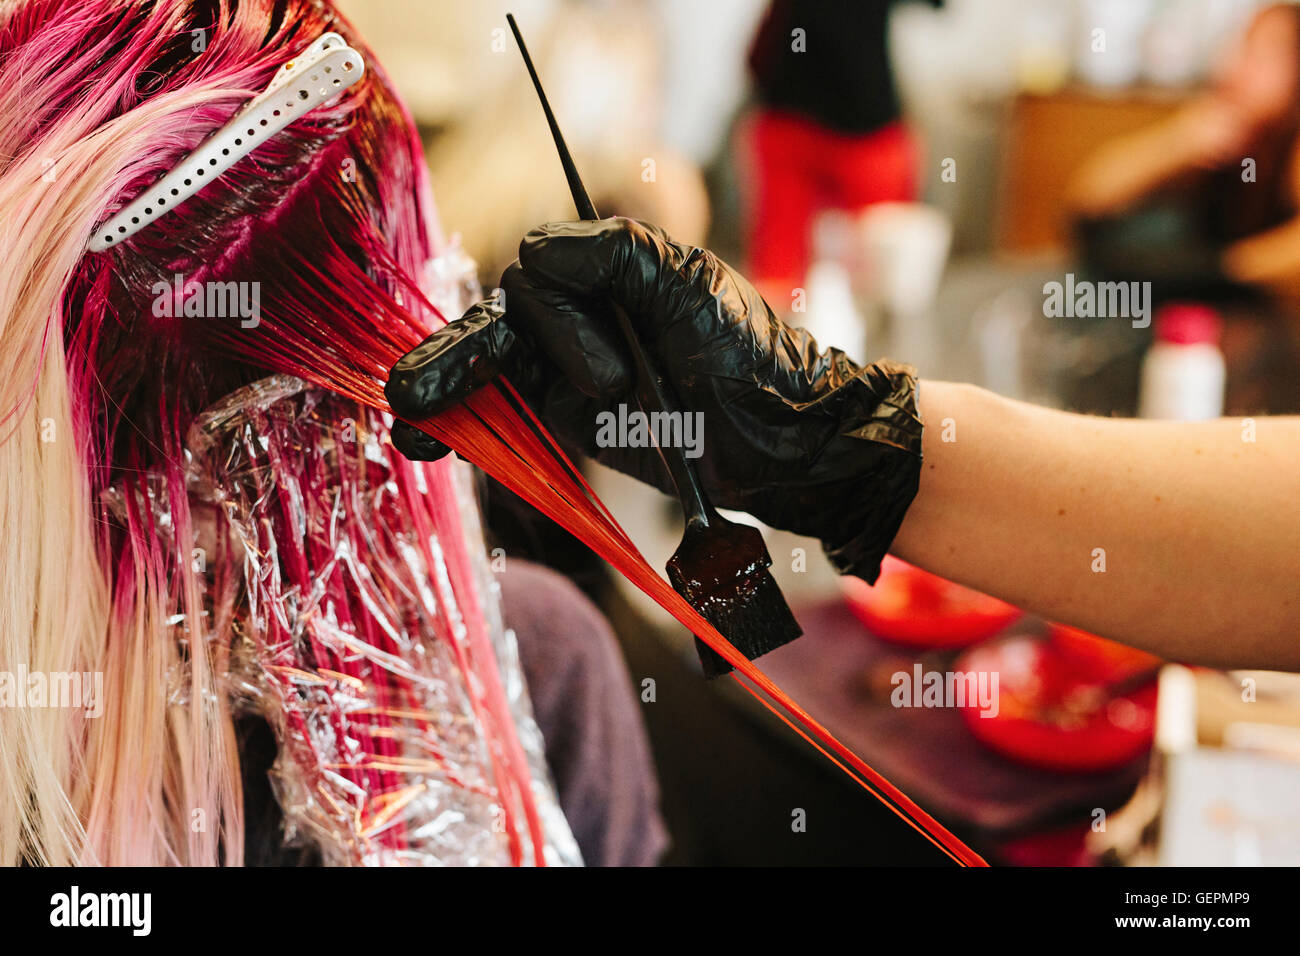 A hair colourist applying pink hair colour to a client's long blonde hair. Stock Photo